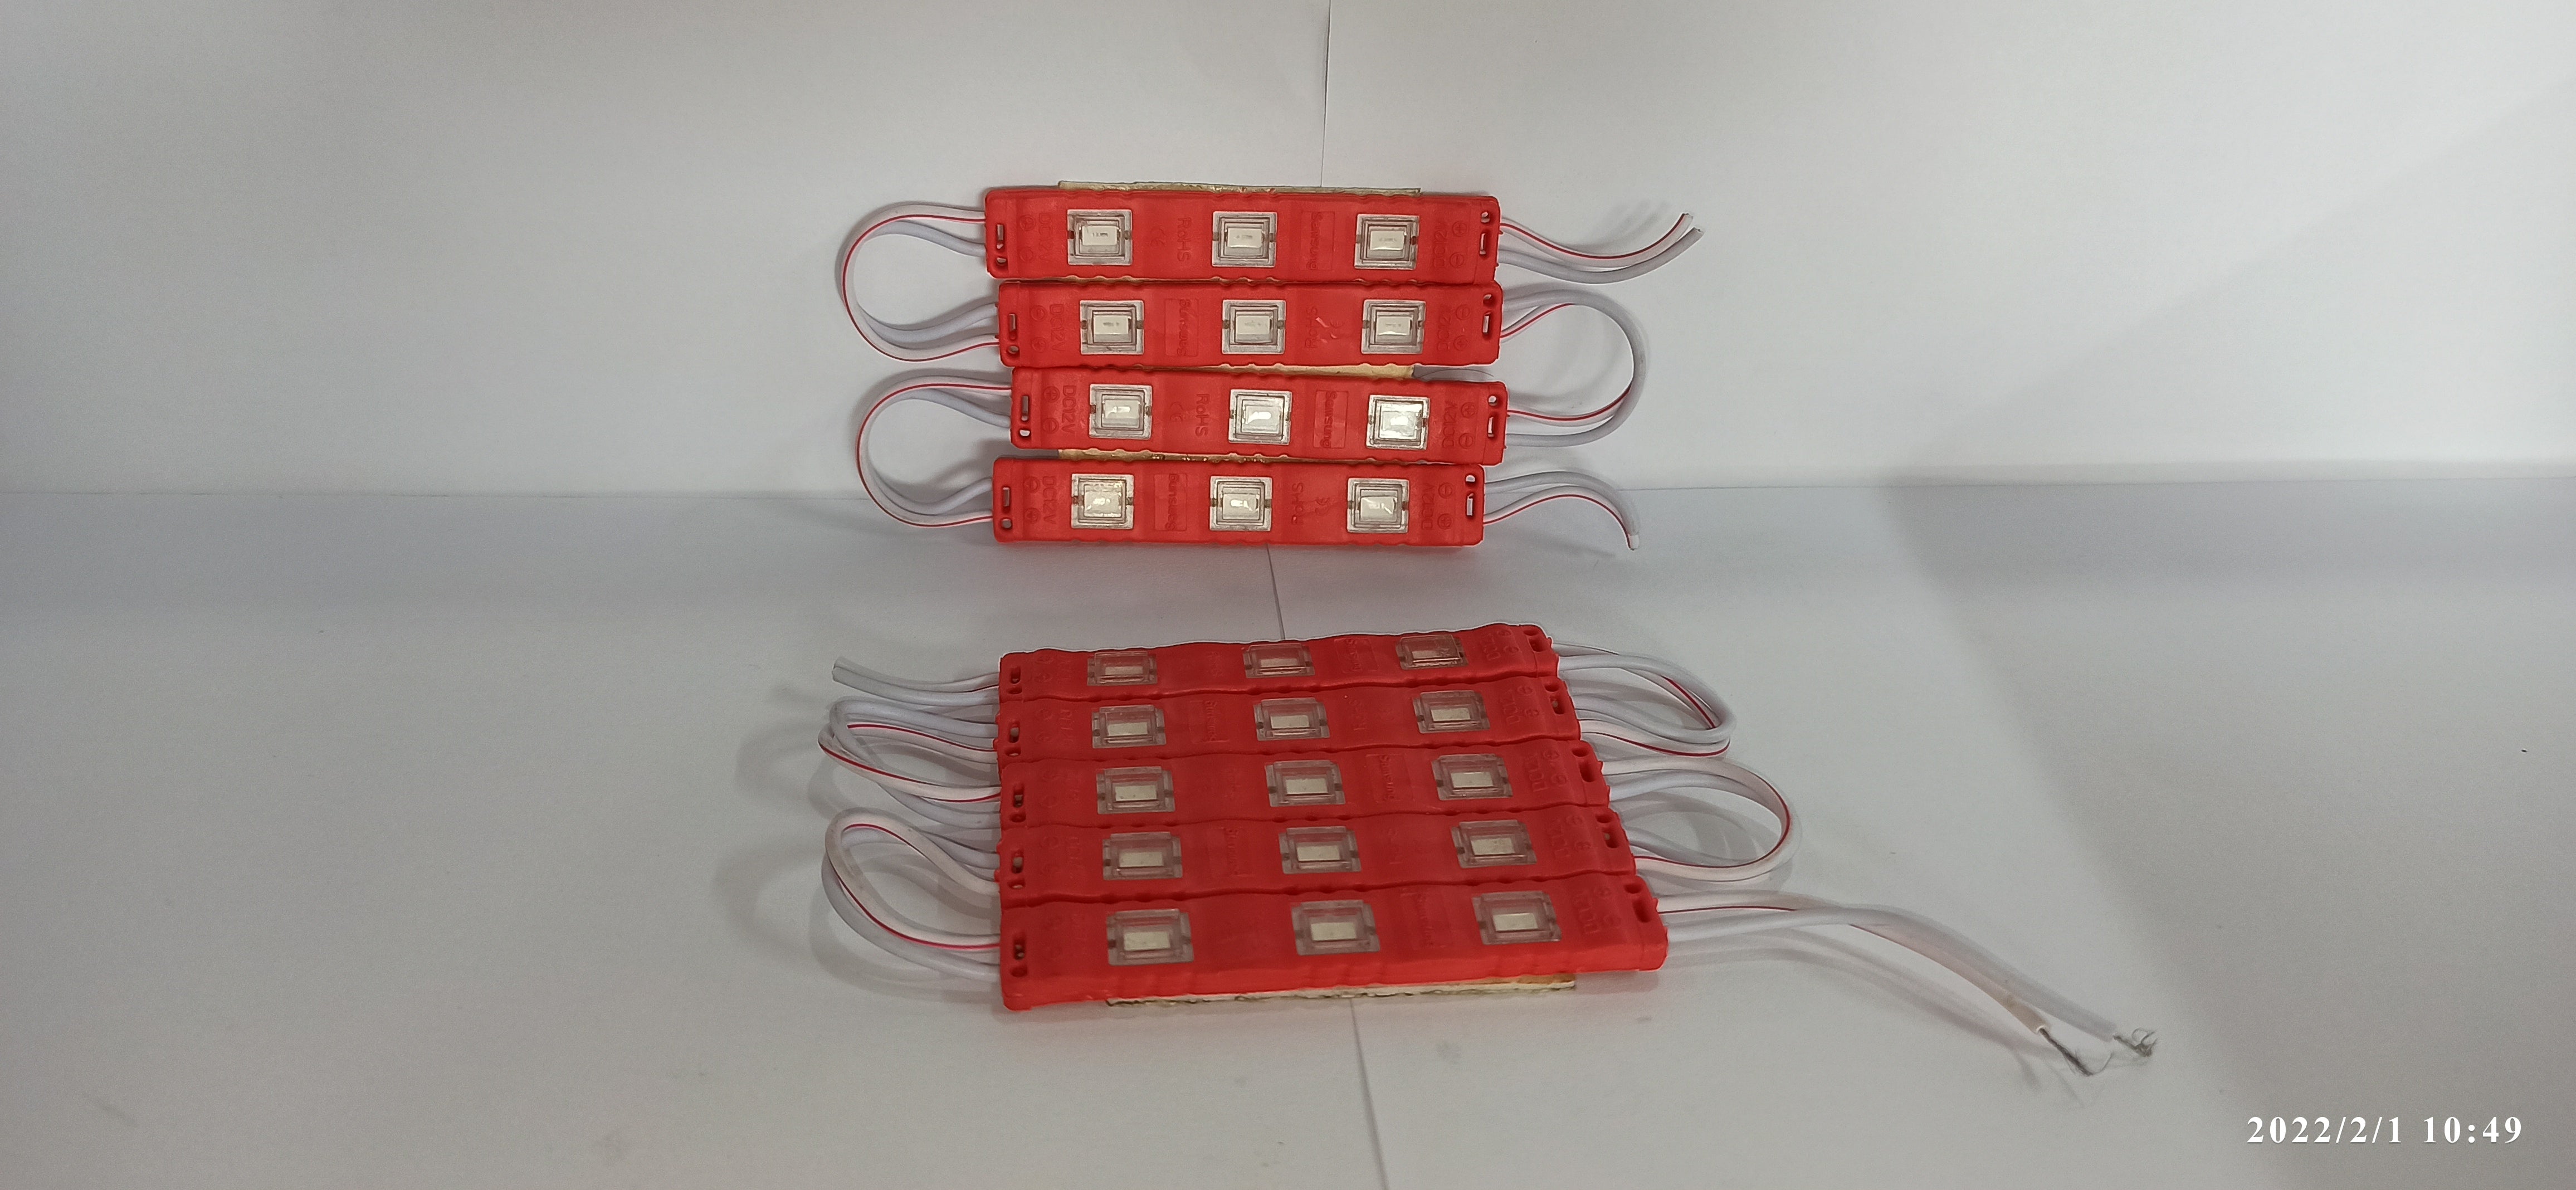 3 LED Strips 12V Waterproof 9 Module Display Lights Electronic Hobby Kit